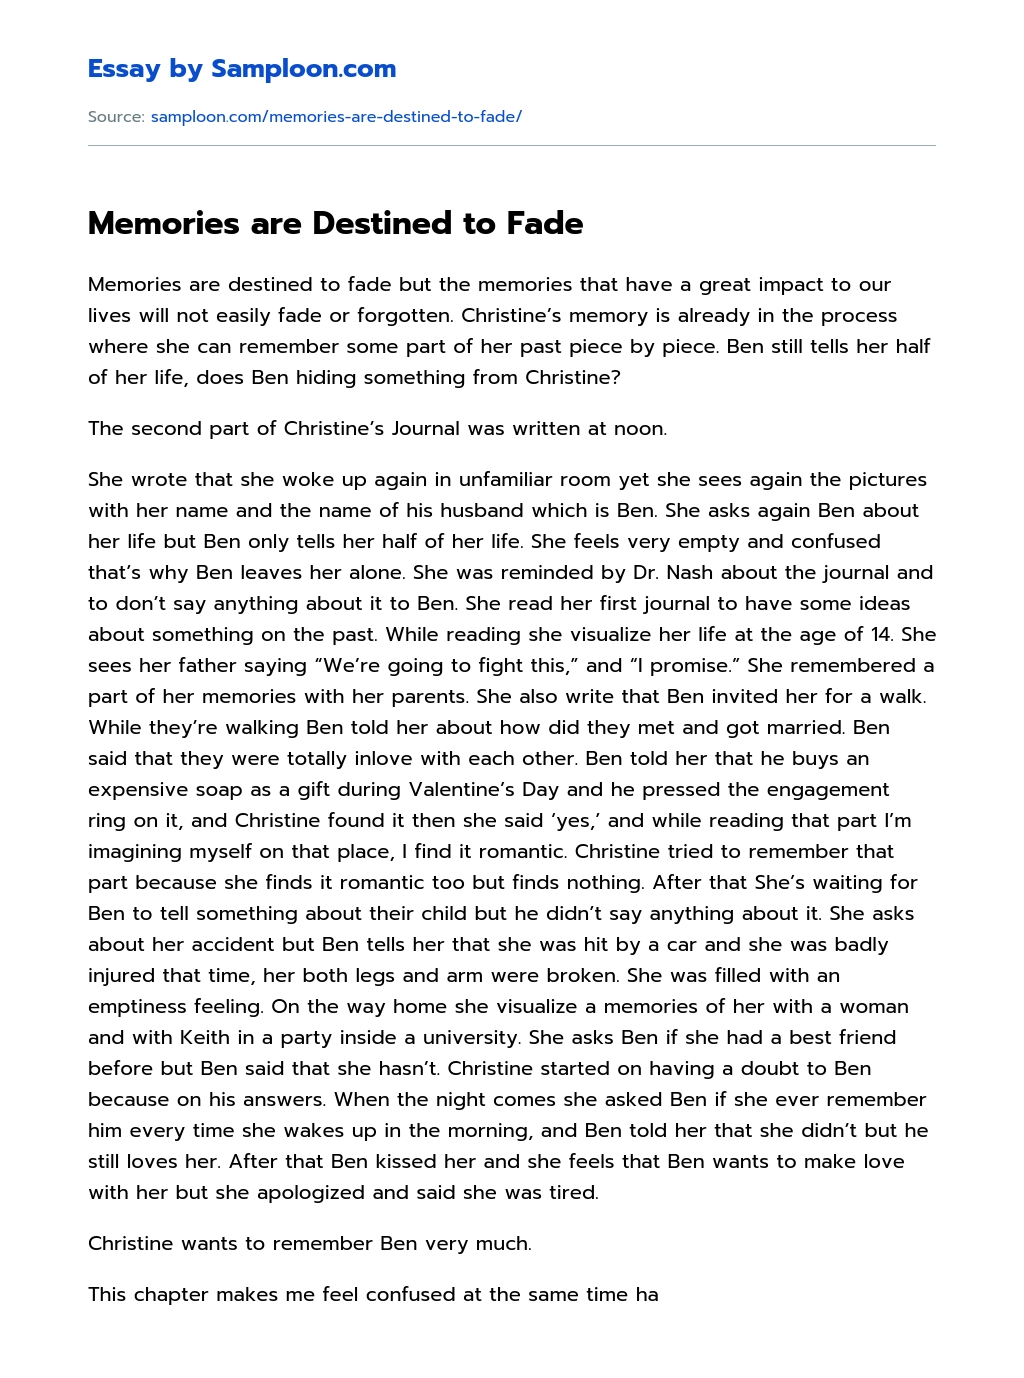 Memories are Destined to Fade essay